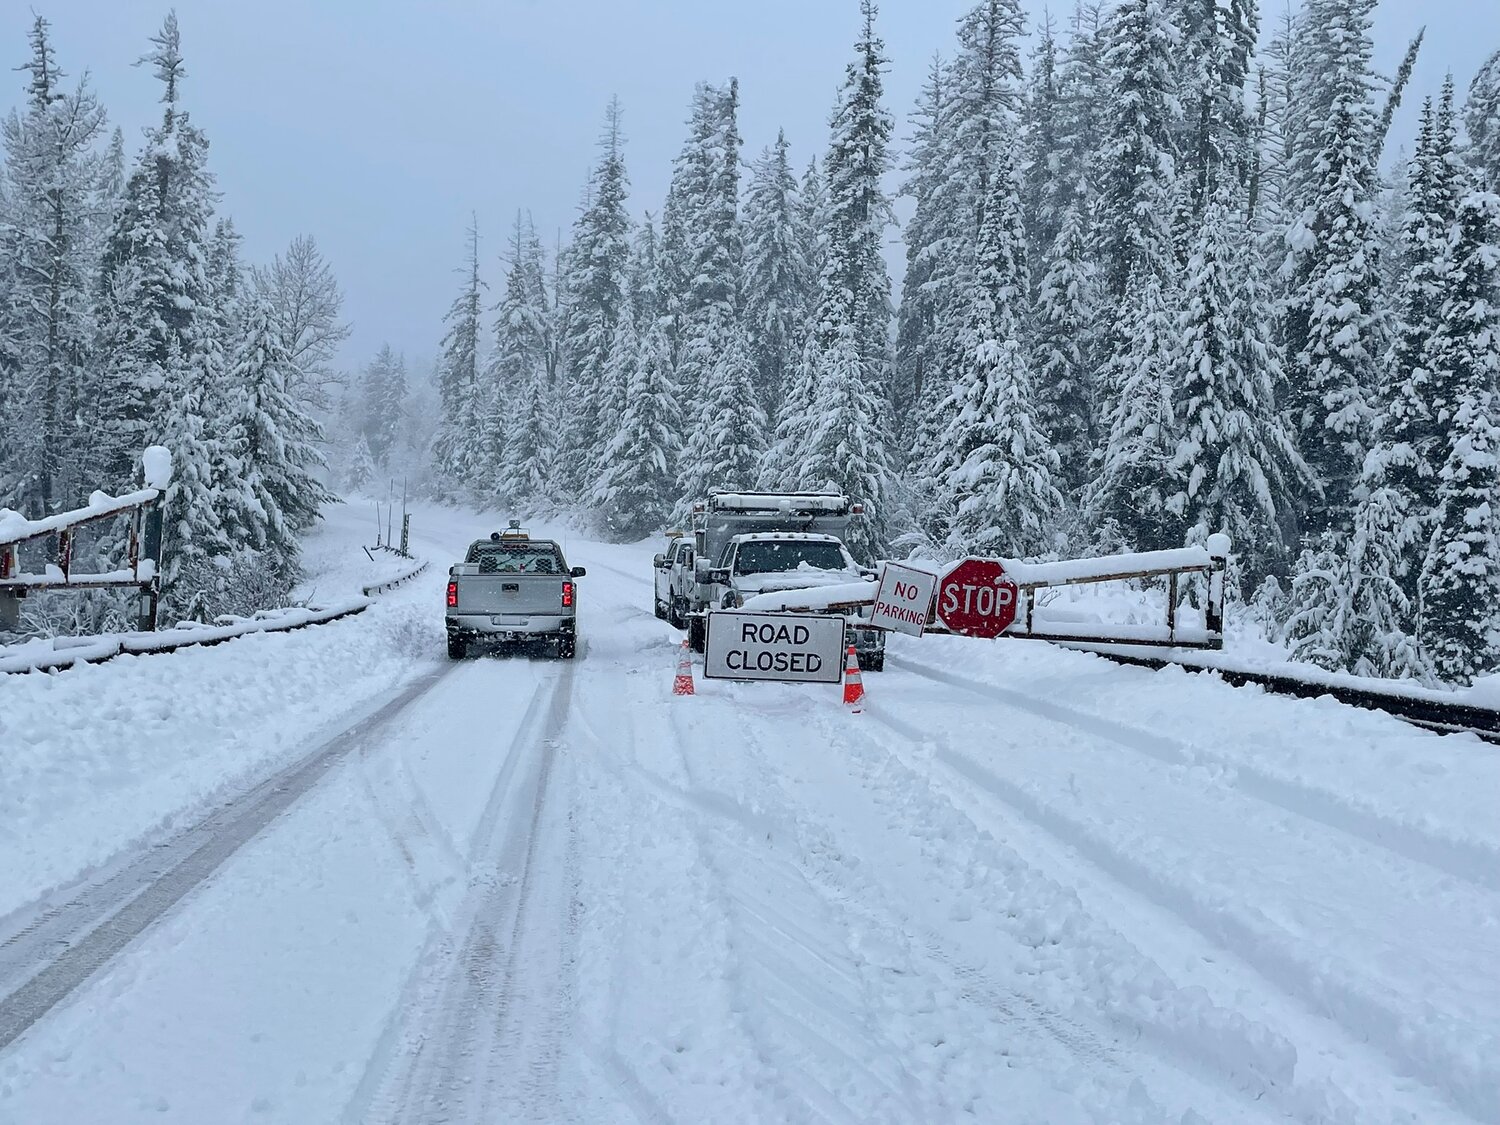 WSDOT Closes North Cascades Highway for winter season Mount Baker